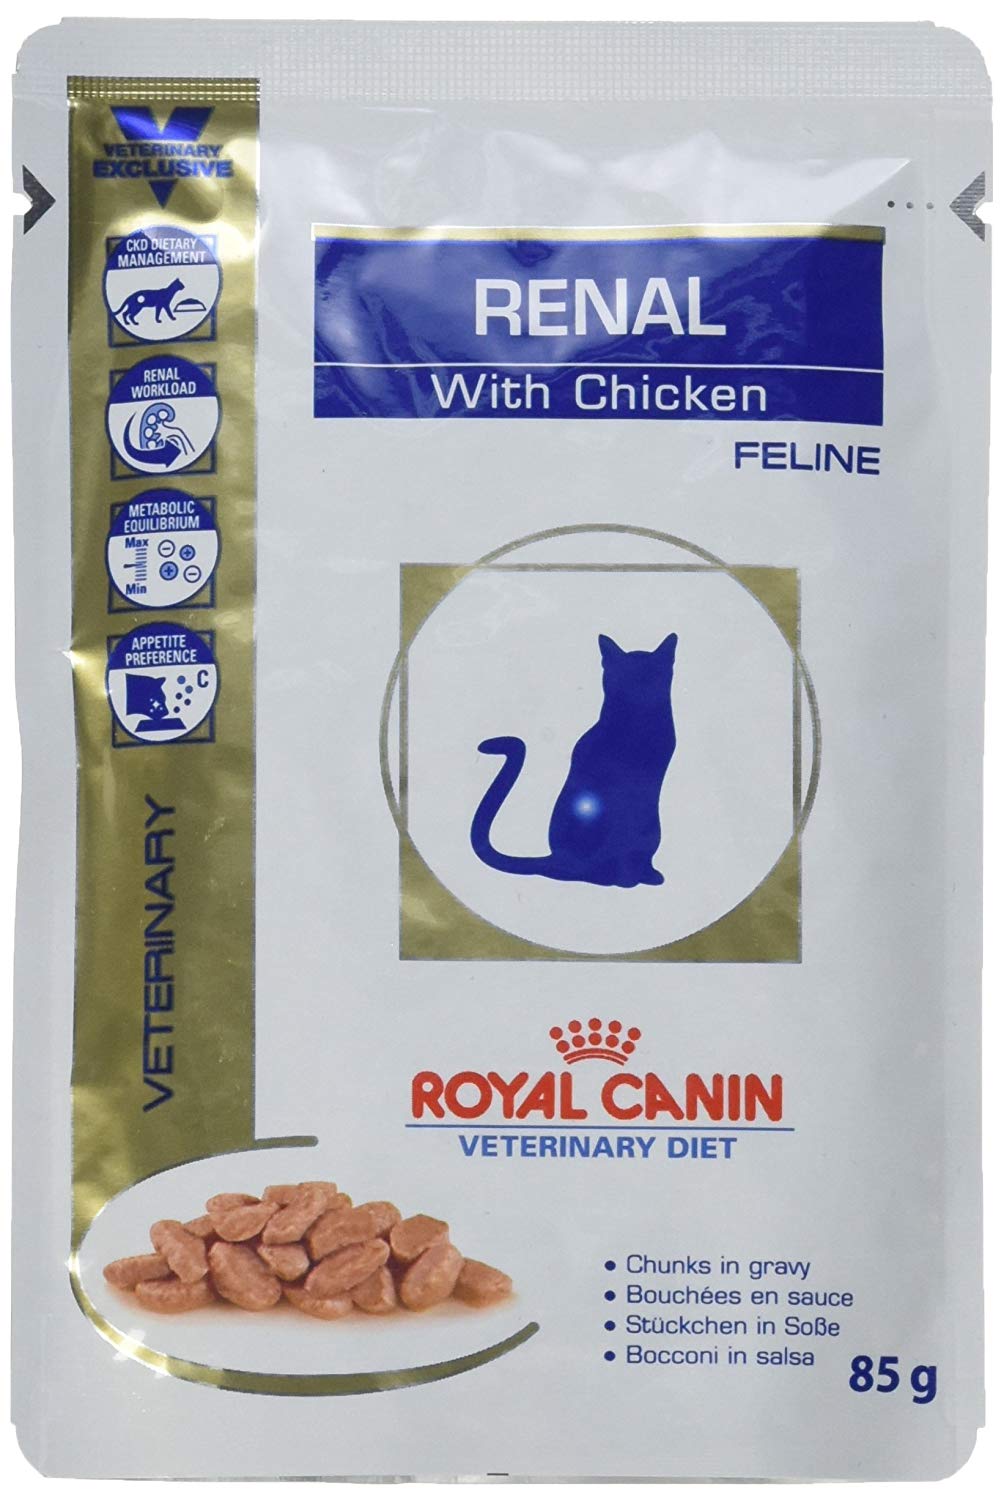 Royal Canin renal для кошек. Royal Canin renal with Chicken для кошек. Royal Canin renal Feline Chicken. Ренал Advanced для кошек. Роял ренал для кошек купить